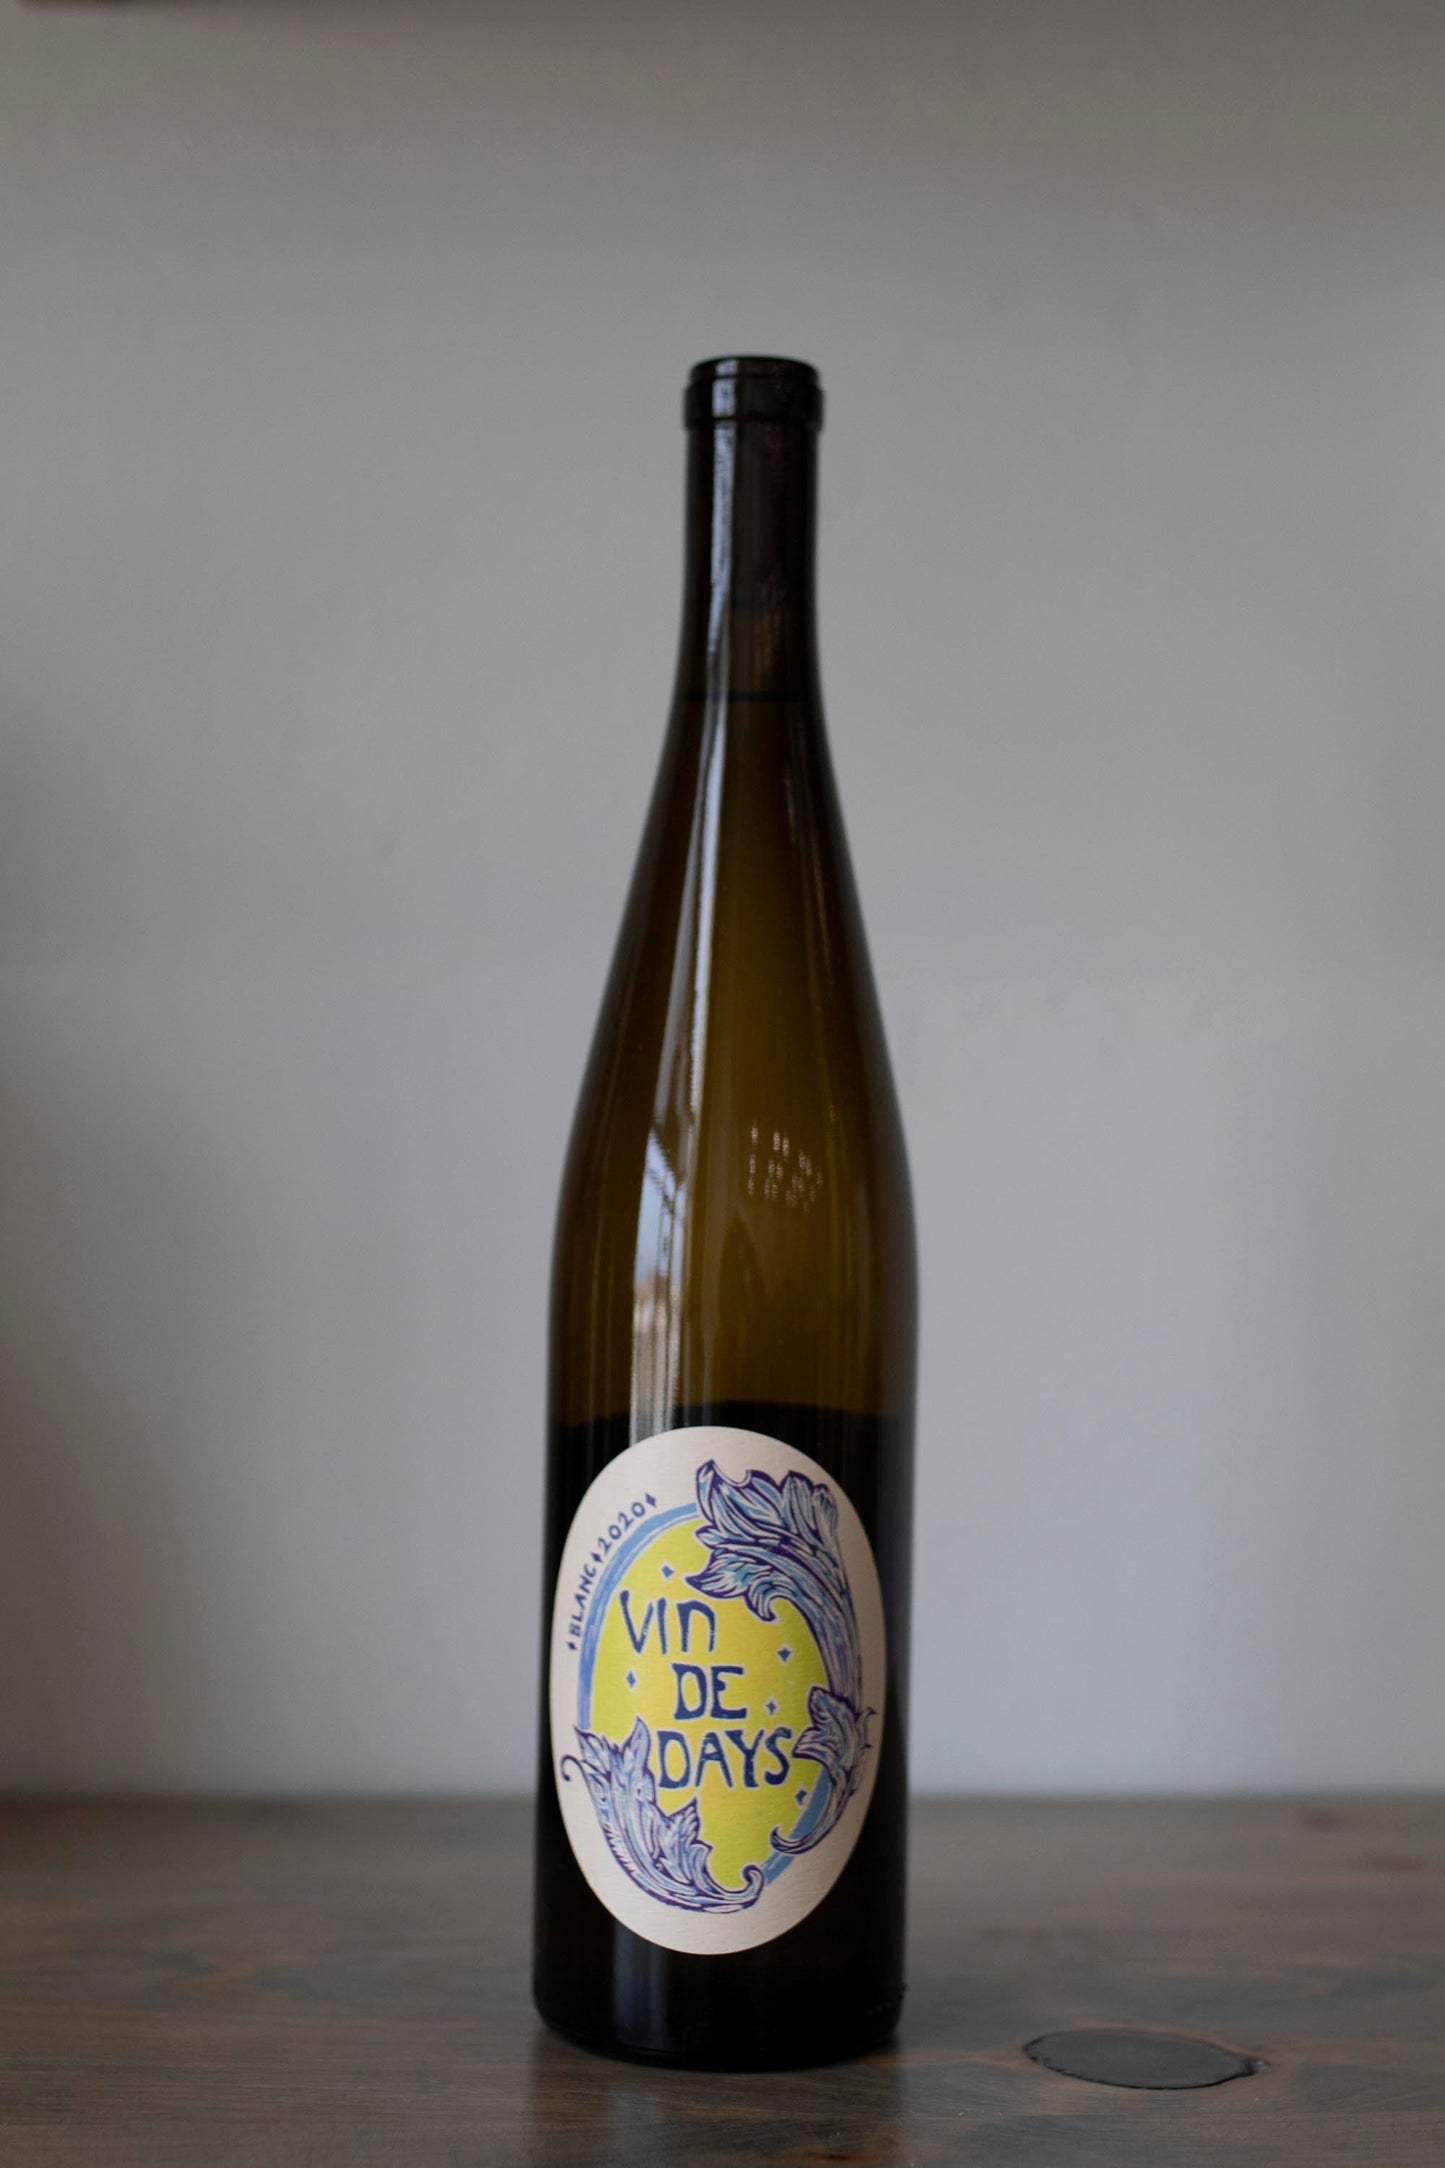 Bottle of Vin de Days Blanc found at Vine & Board in 3809 NW 166th St Suite 1, Edmond, OK 73012